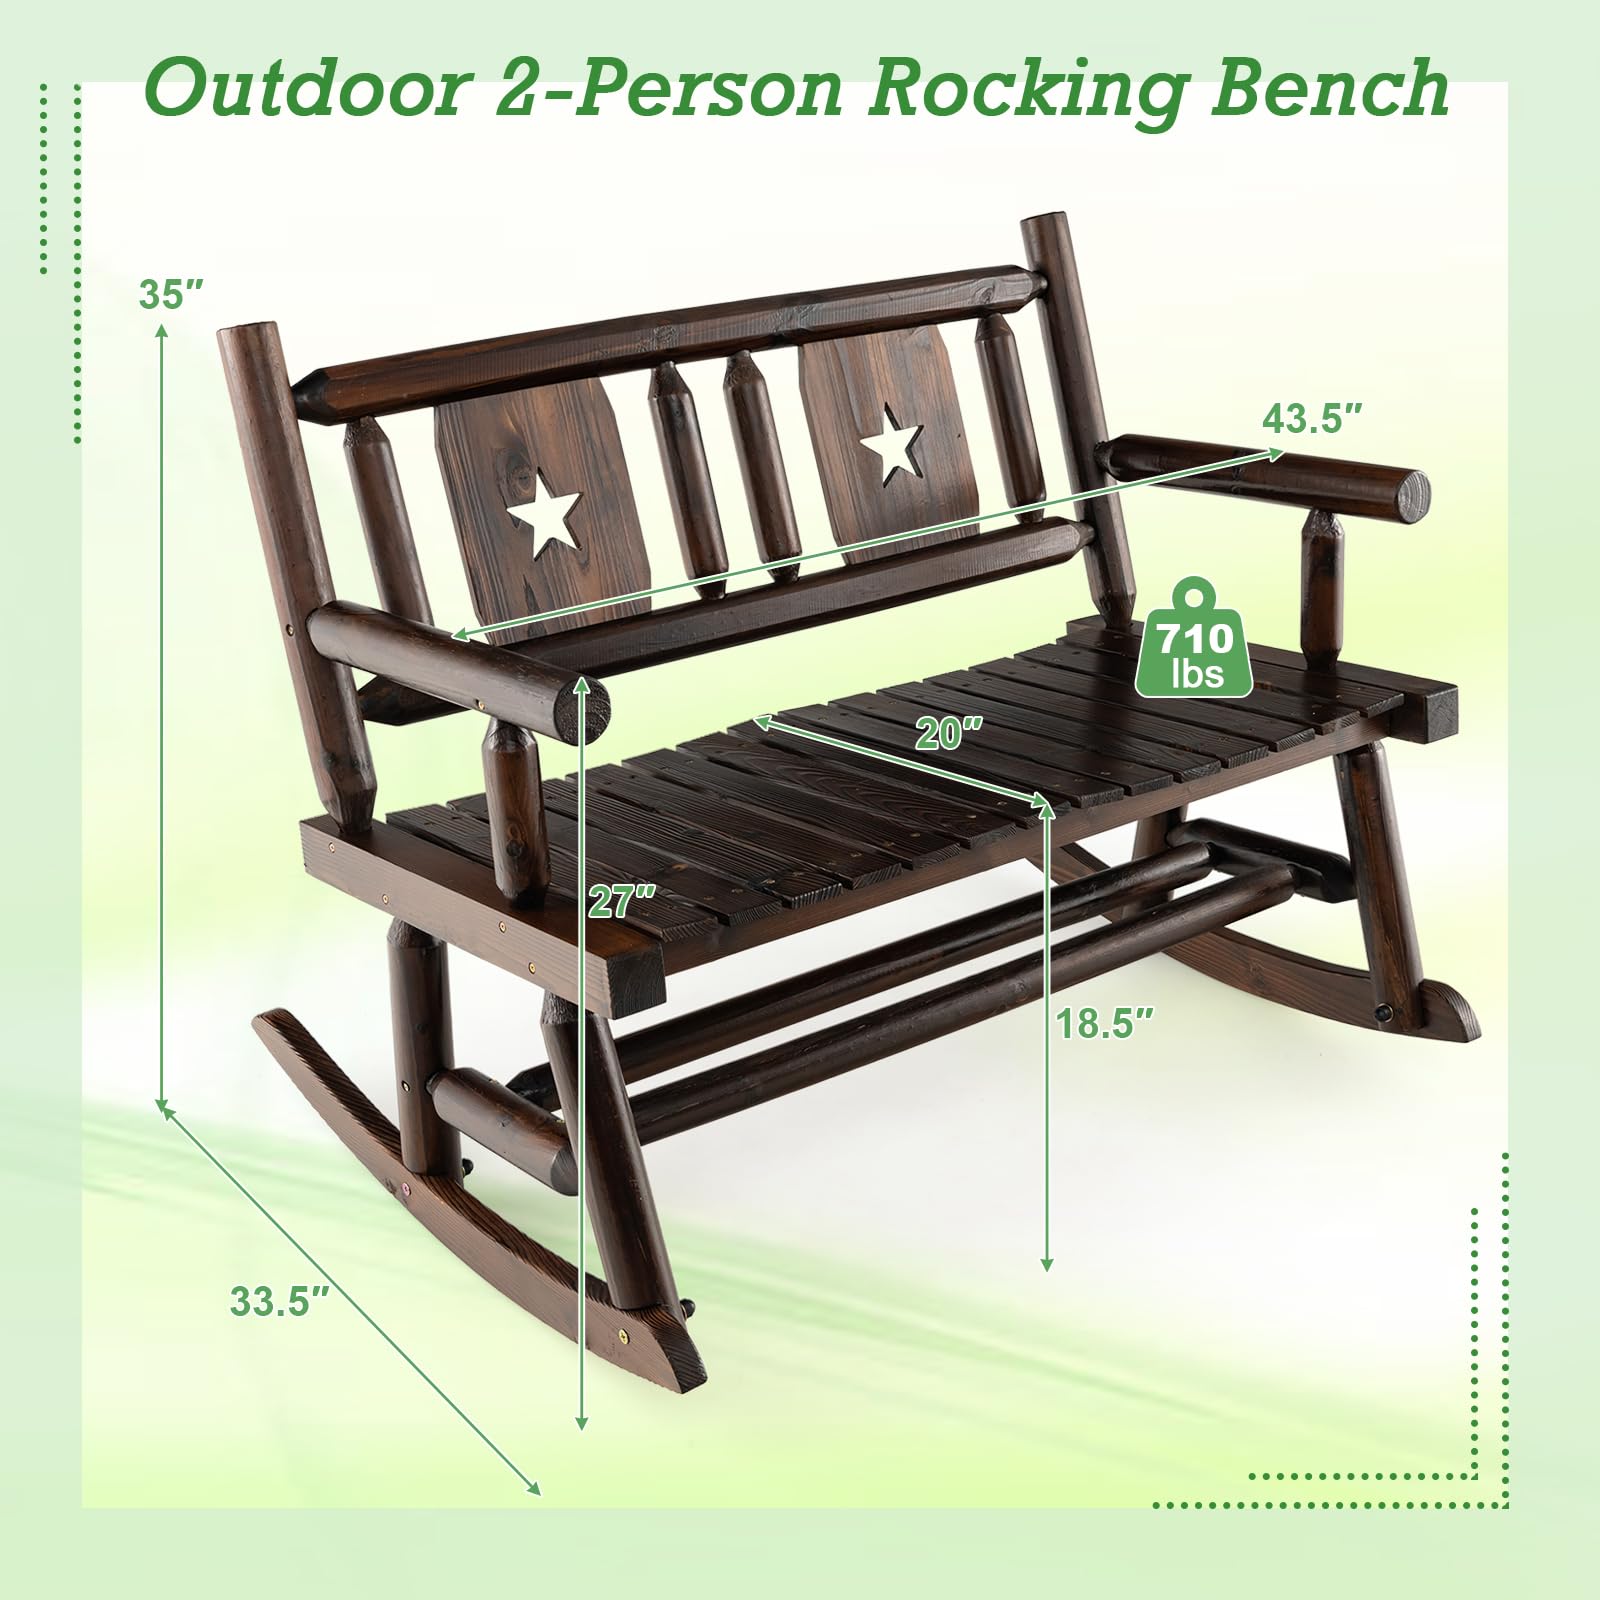 Giantex Outdoor Rocking Bench, Patio Loveseat Rocker for 2 w/Ergonomic Back & Log Arms, Carbonized Fir Wood Frame